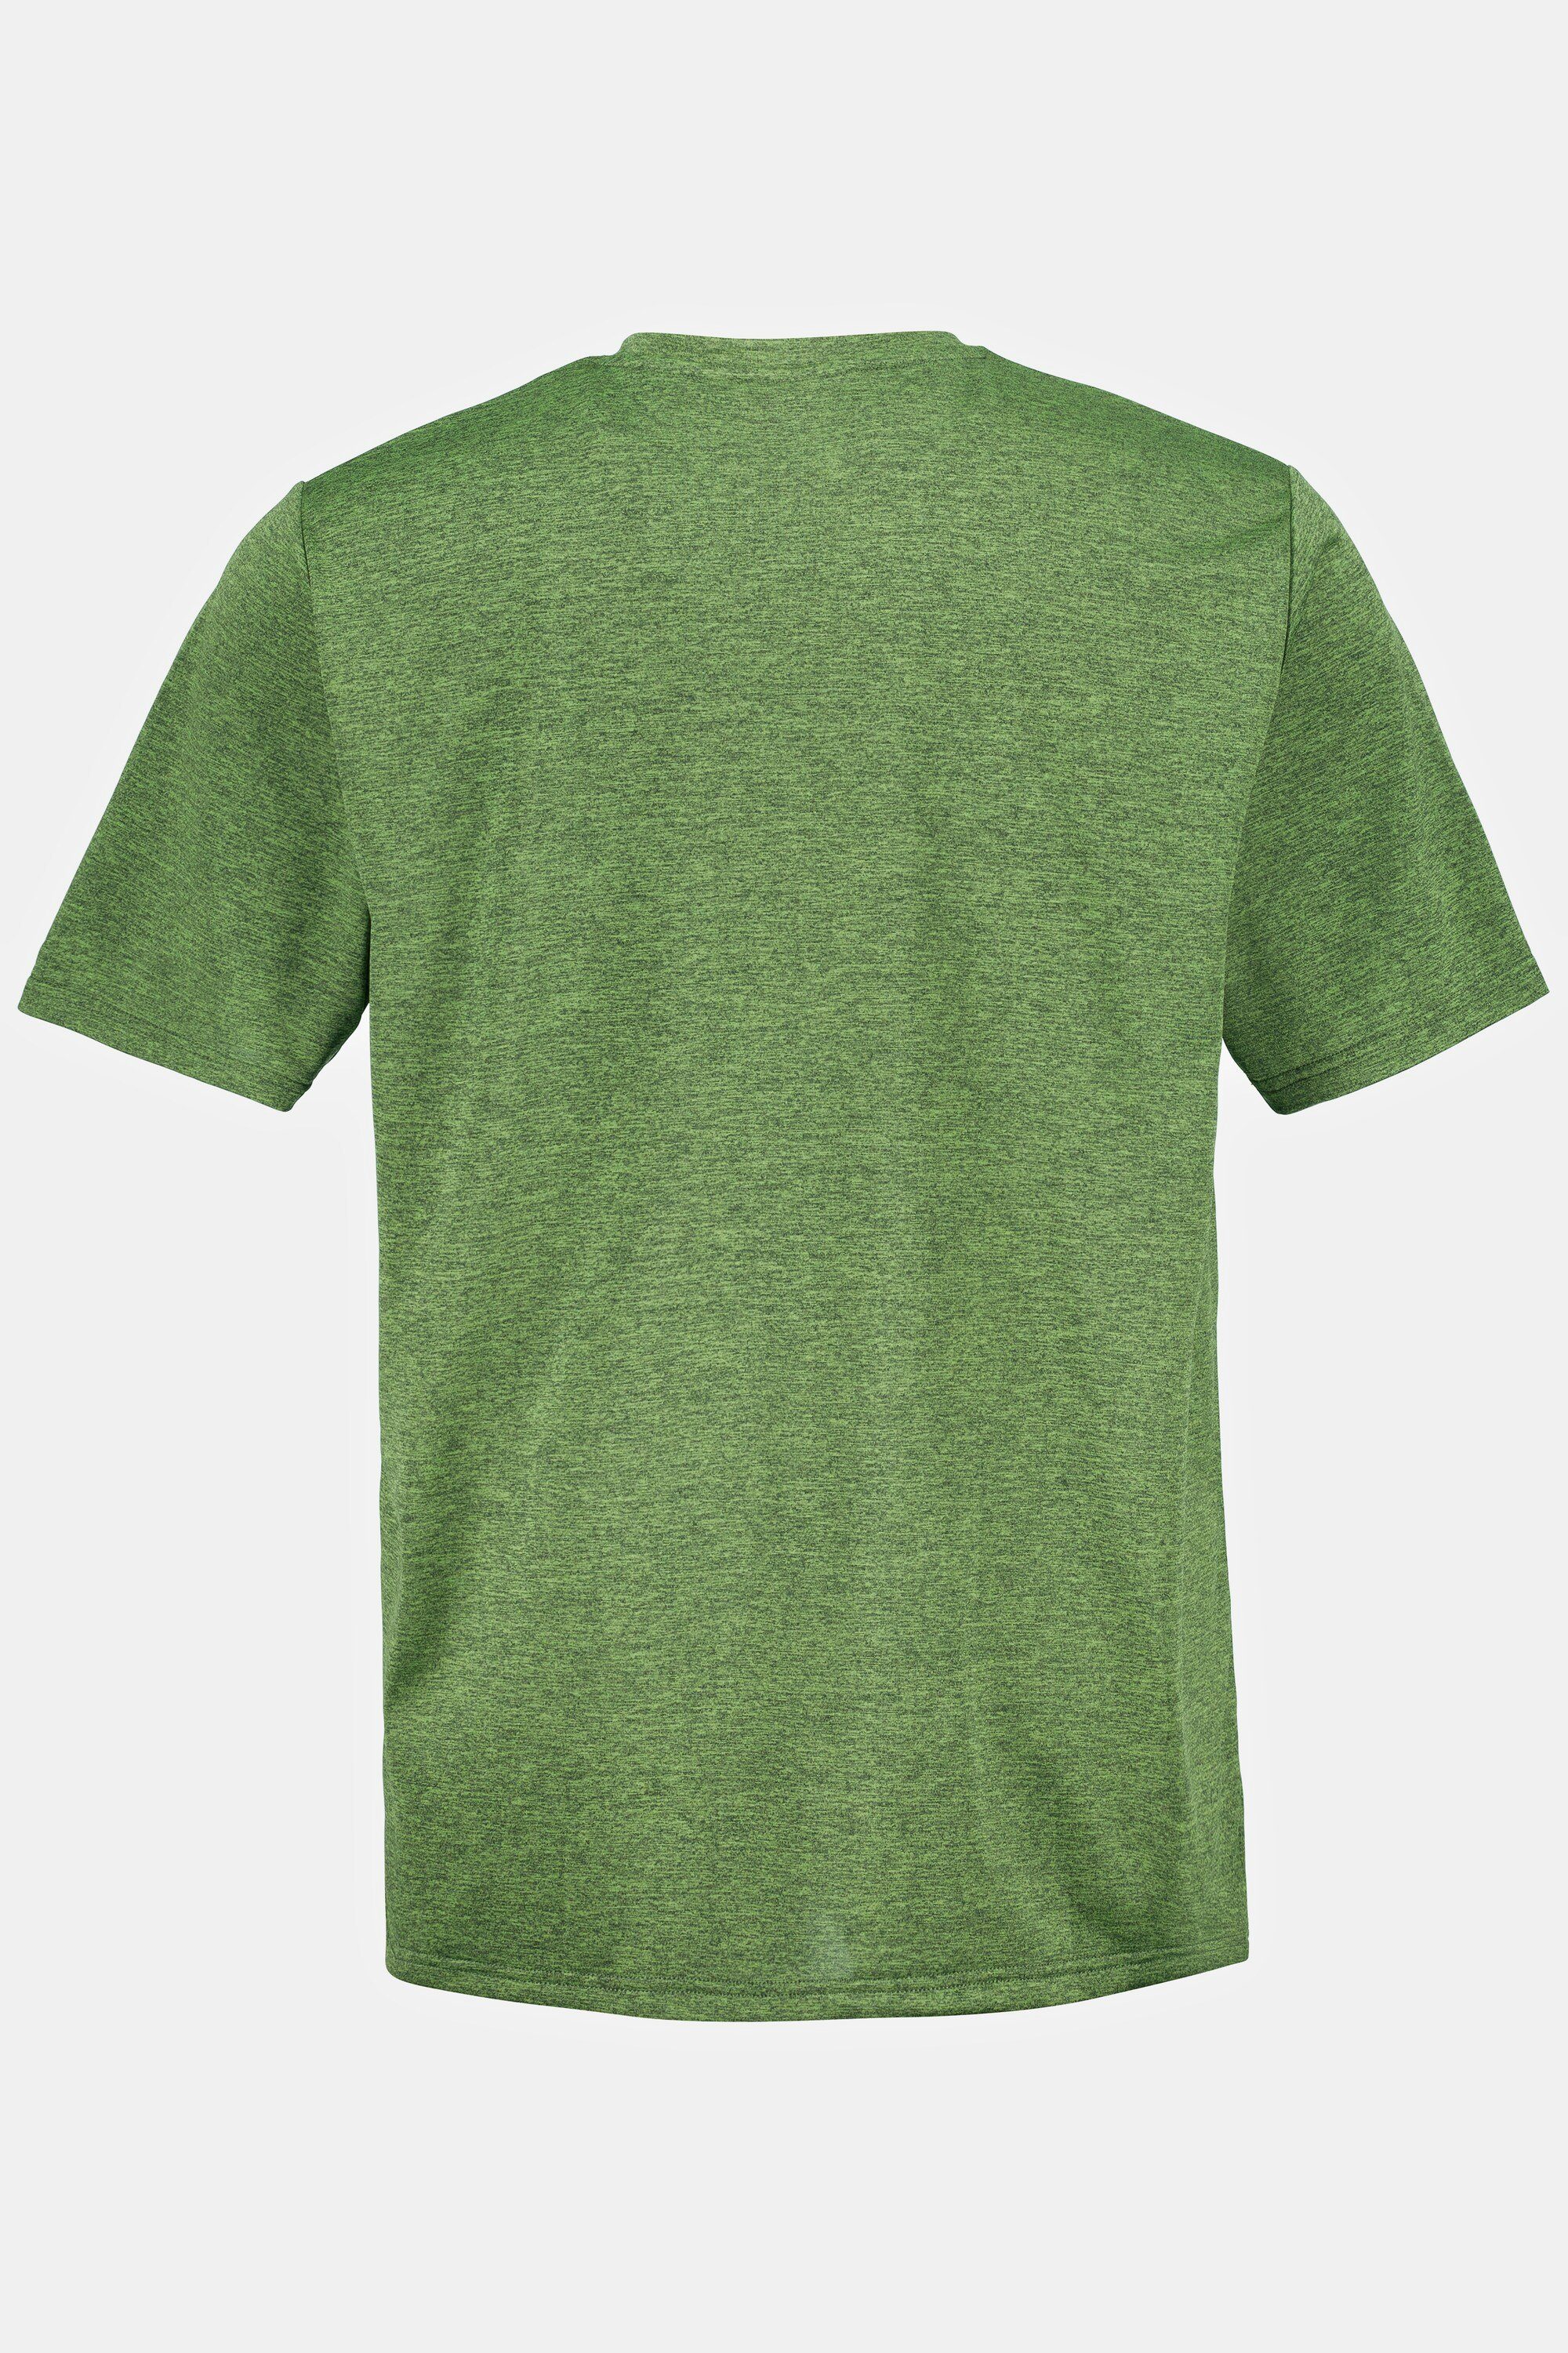 JP1880 T-Shirt Funktions-Shirt Halbarm oliv FLEXNAMIC® QuickDry